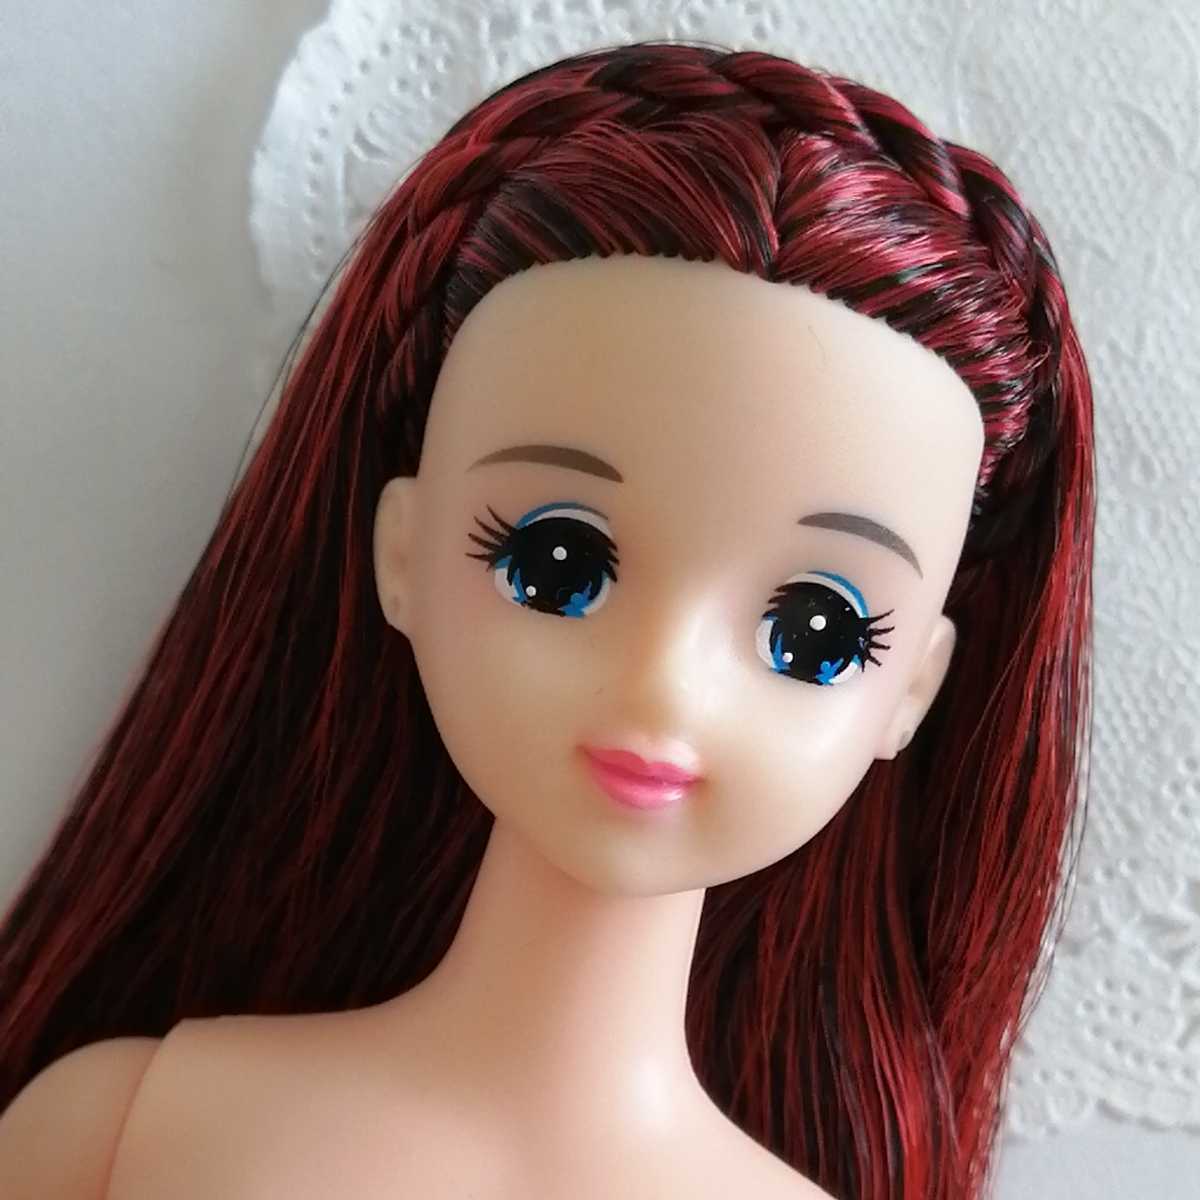 2r829 メッシュ エイティーンジェニー 太眉 ジェニー 人形本体 超ロングヘア 赤 黒 日本製 TAKARA JAPAN